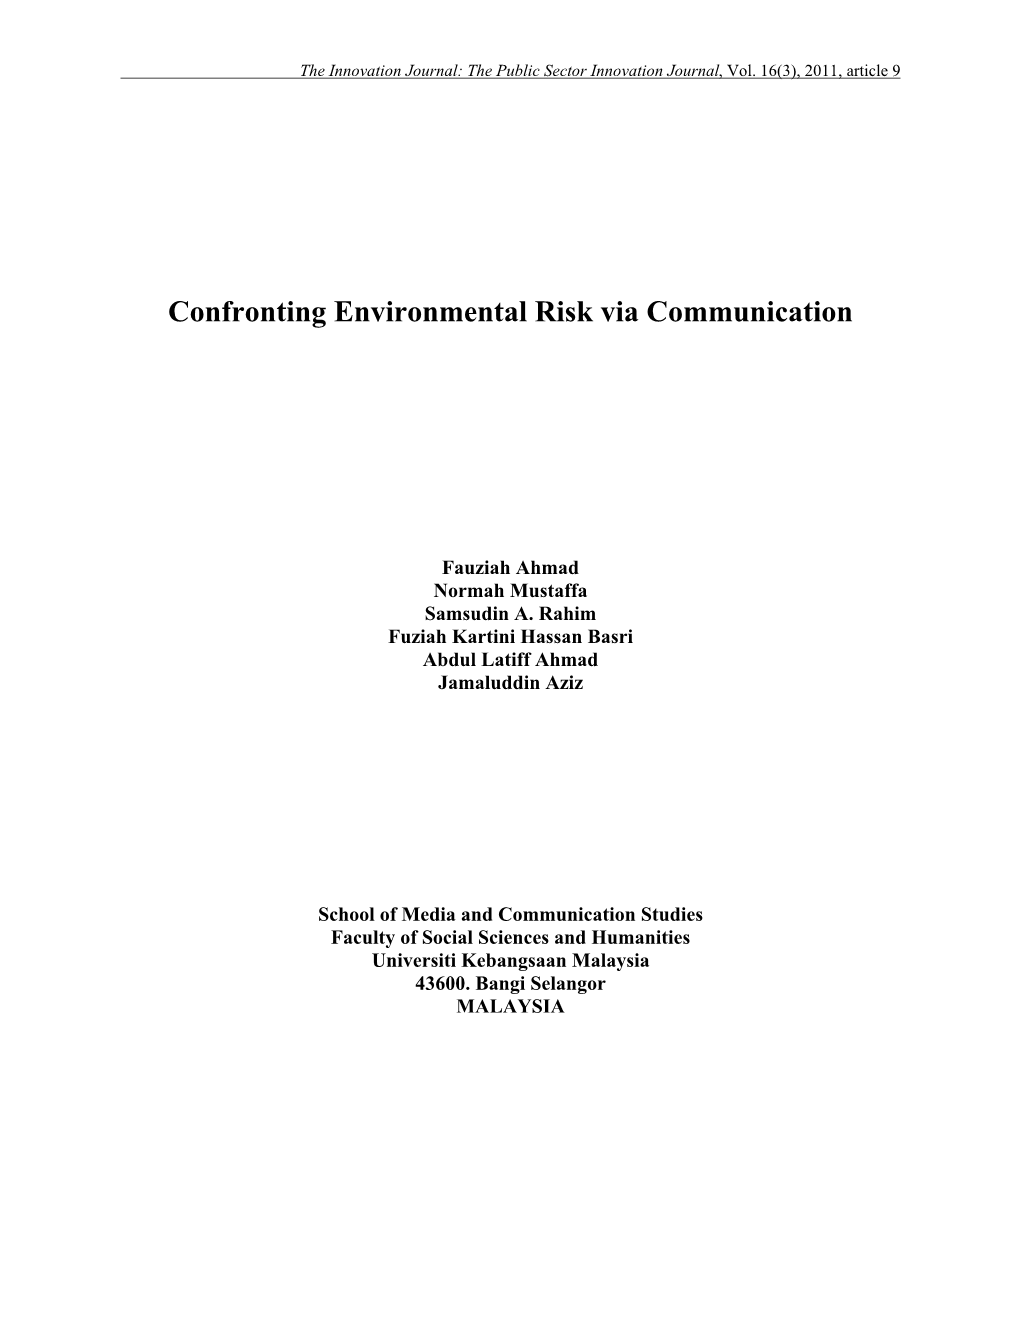 Confronting Environmental Risk Via Communication